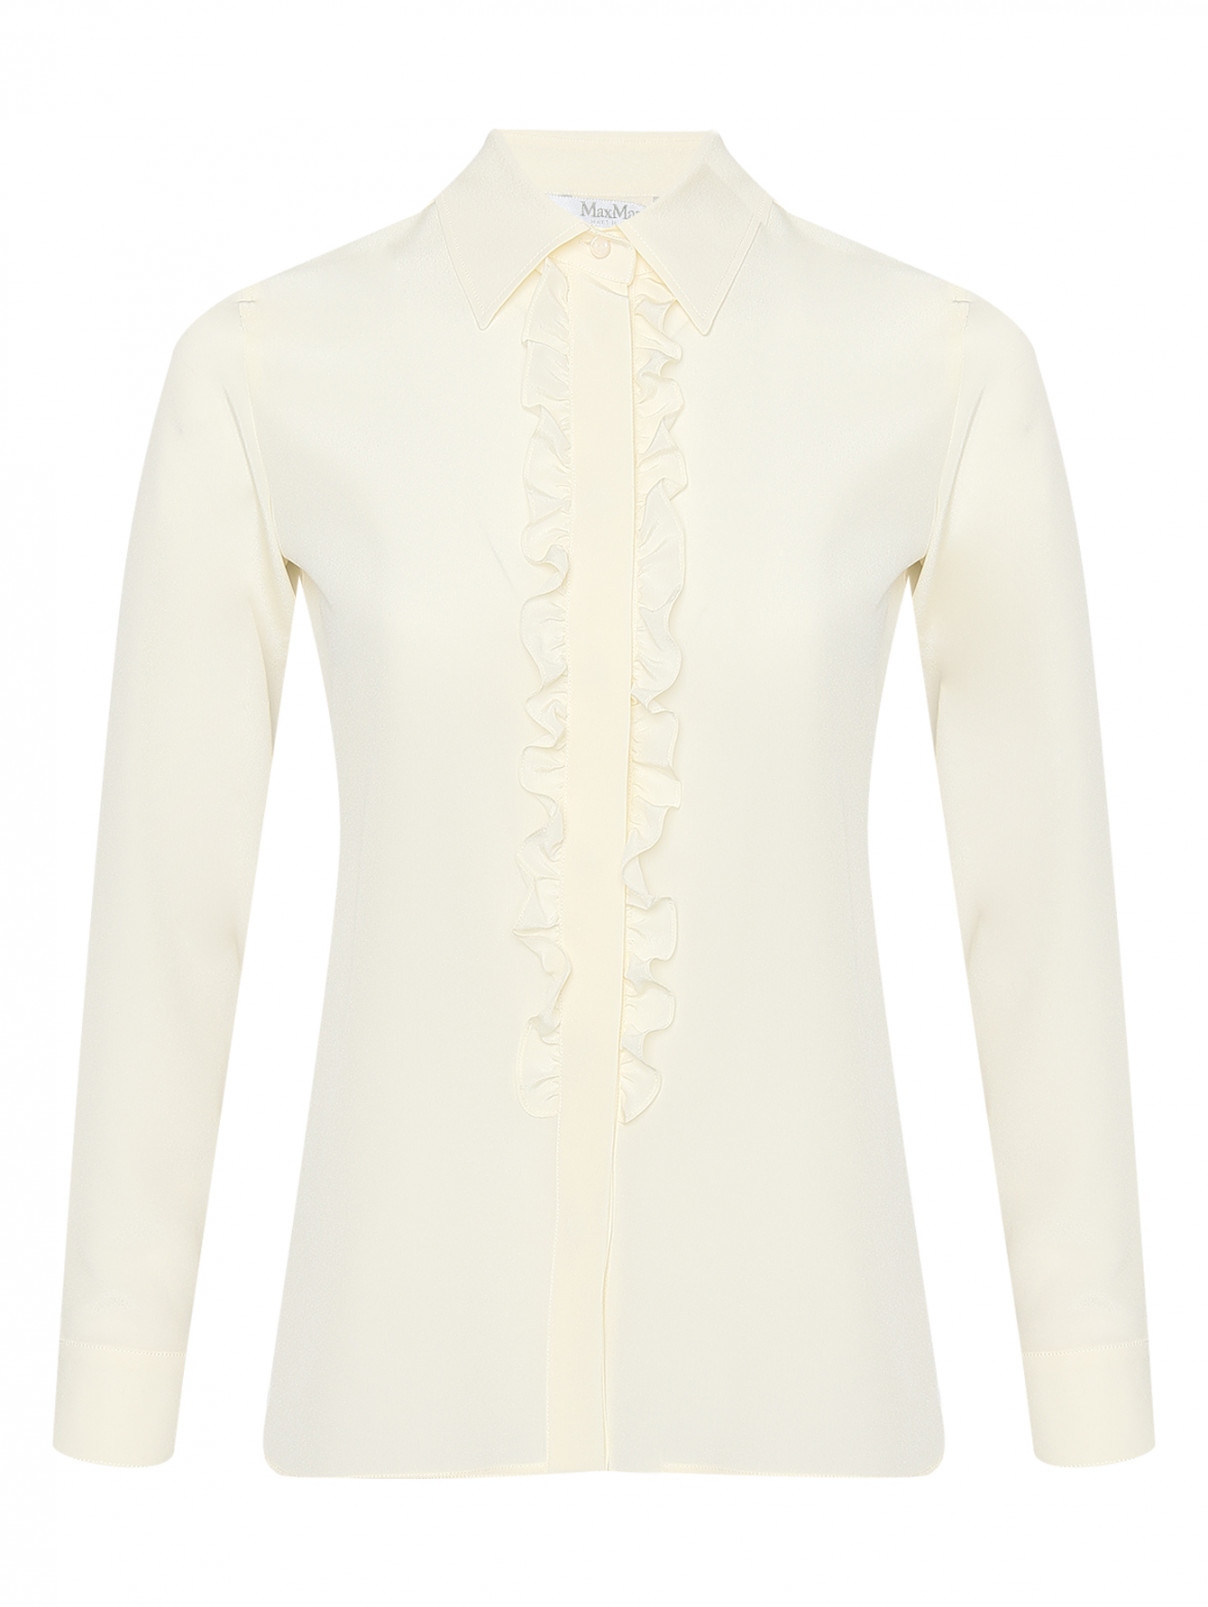 Блуза из шелка с жабо Max Mara  –  Общий вид  – Цвет:  Белый